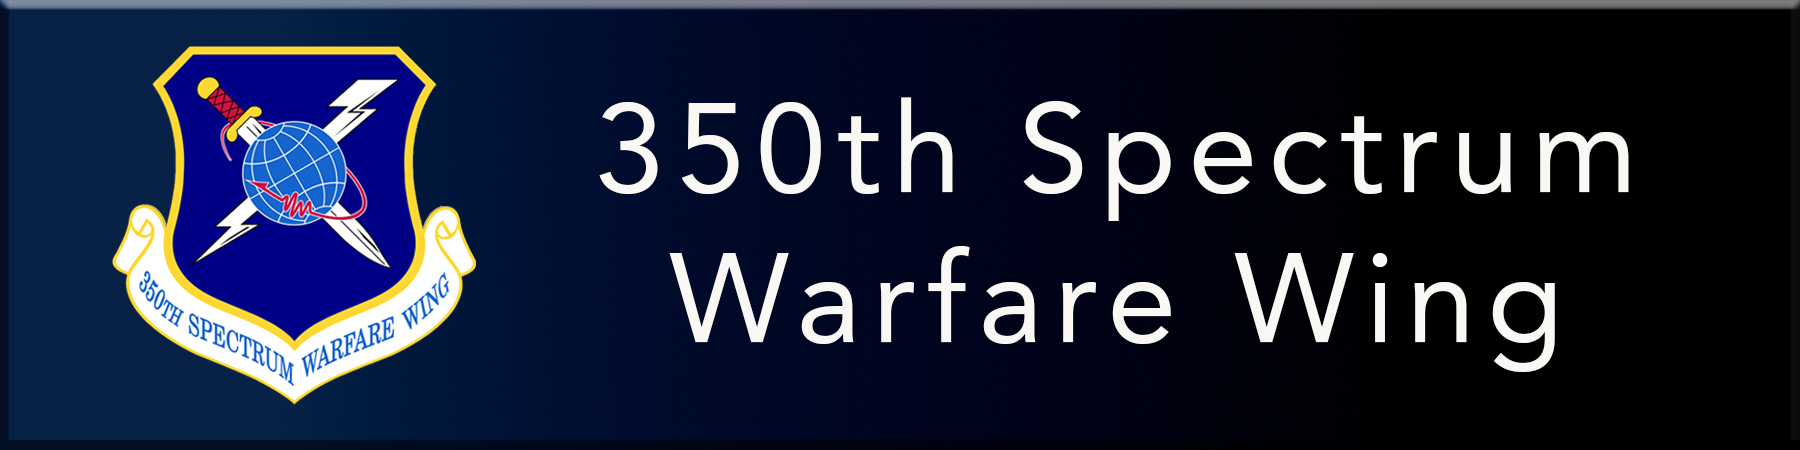 350th Spectrum Warefare Wing banner